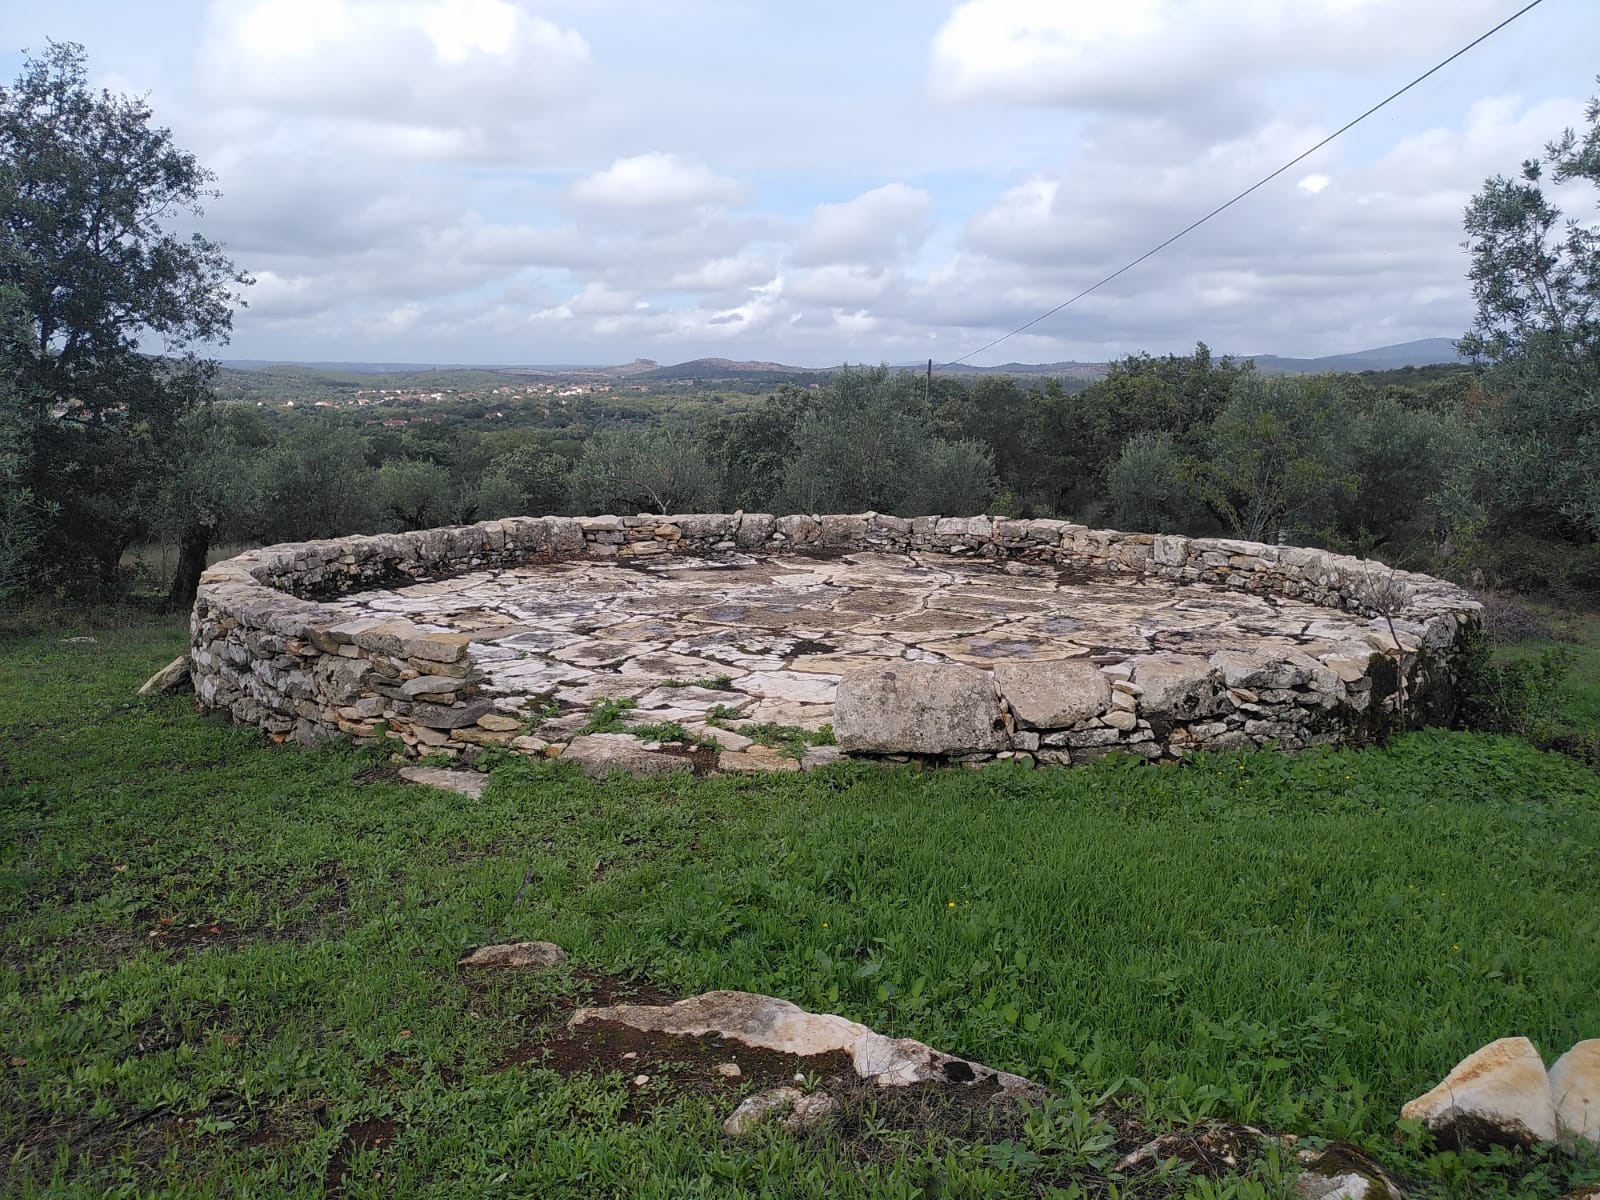 An eira (circular stone platform) in a field.